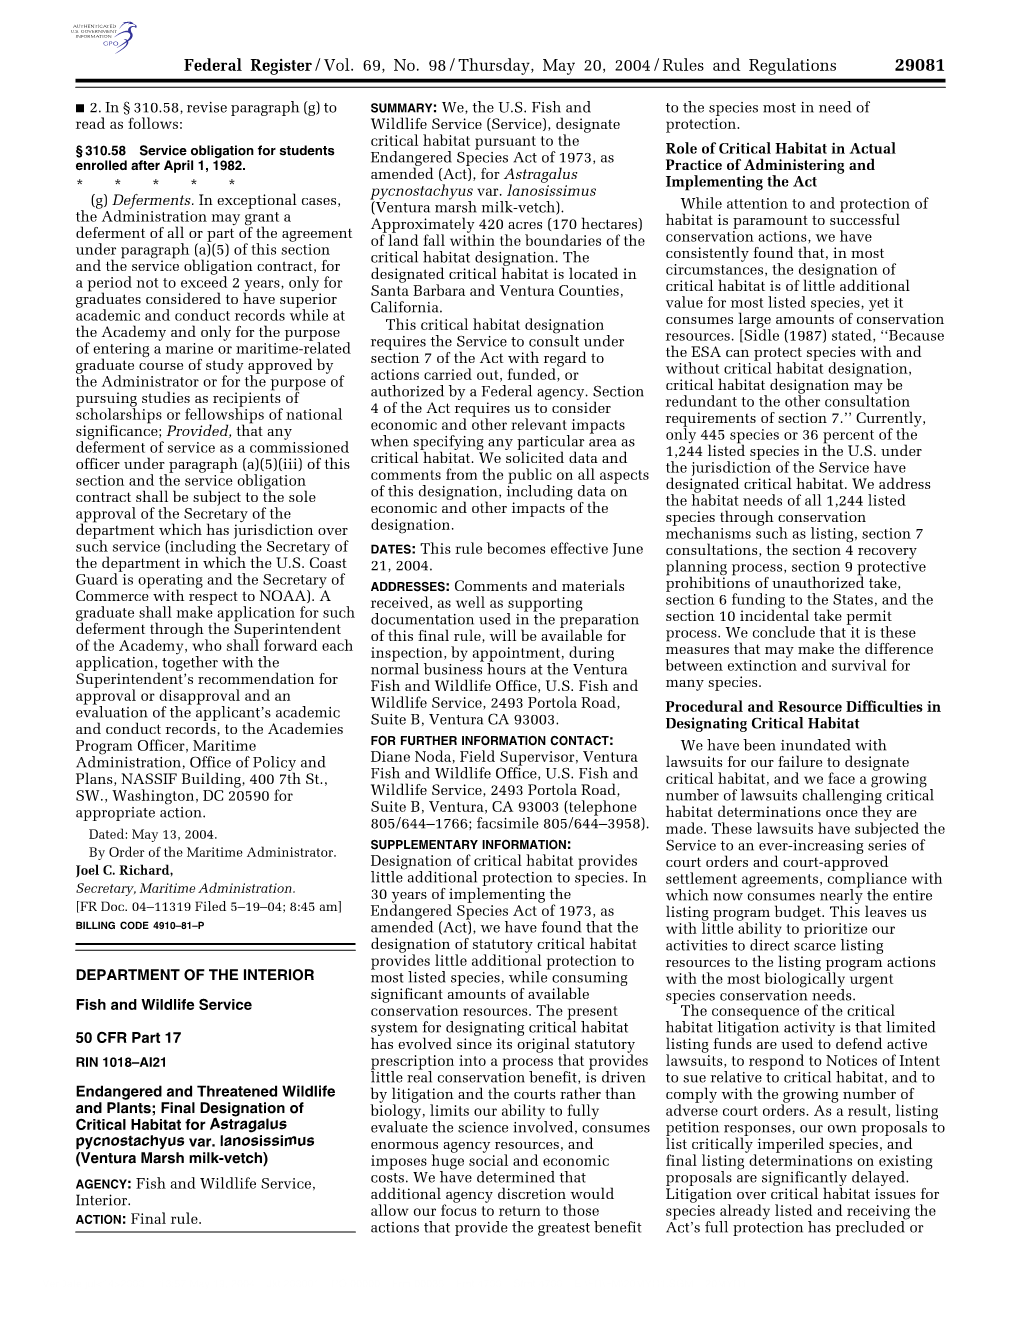 Final Designation of Critical Habitat for Astragalus Pycnostachyus Var